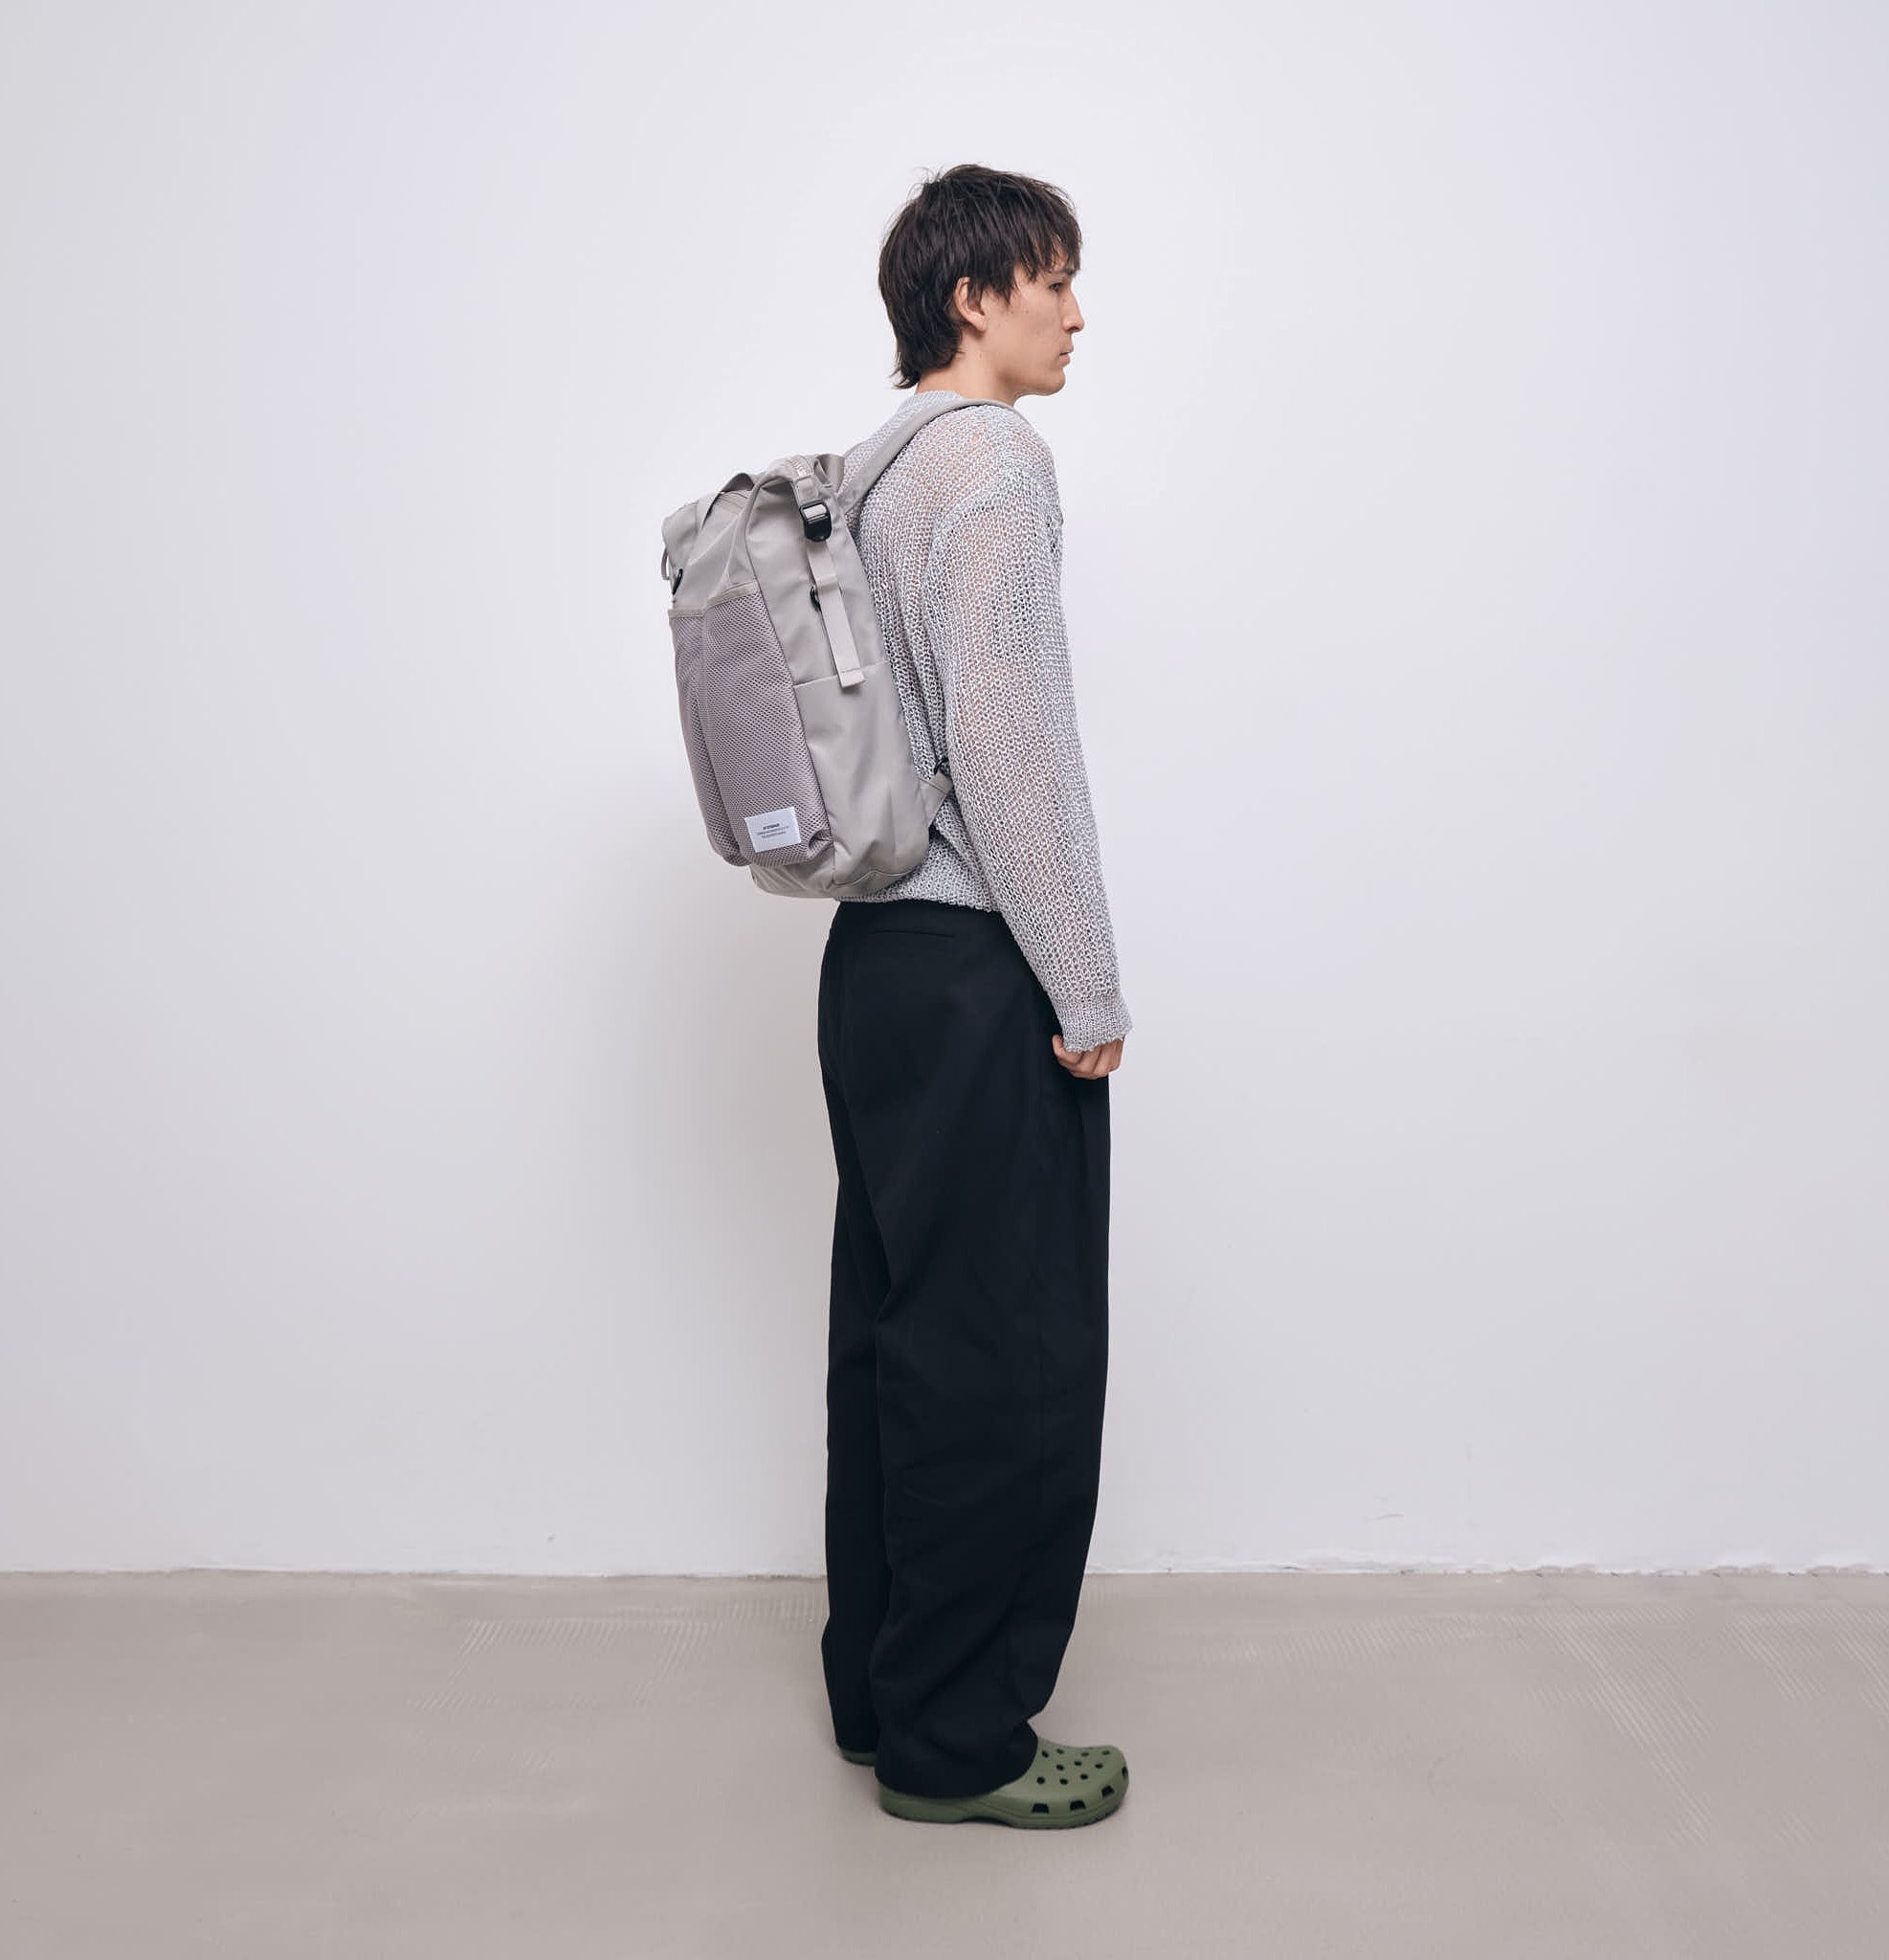 Backpack - Silver - James Ay - Model